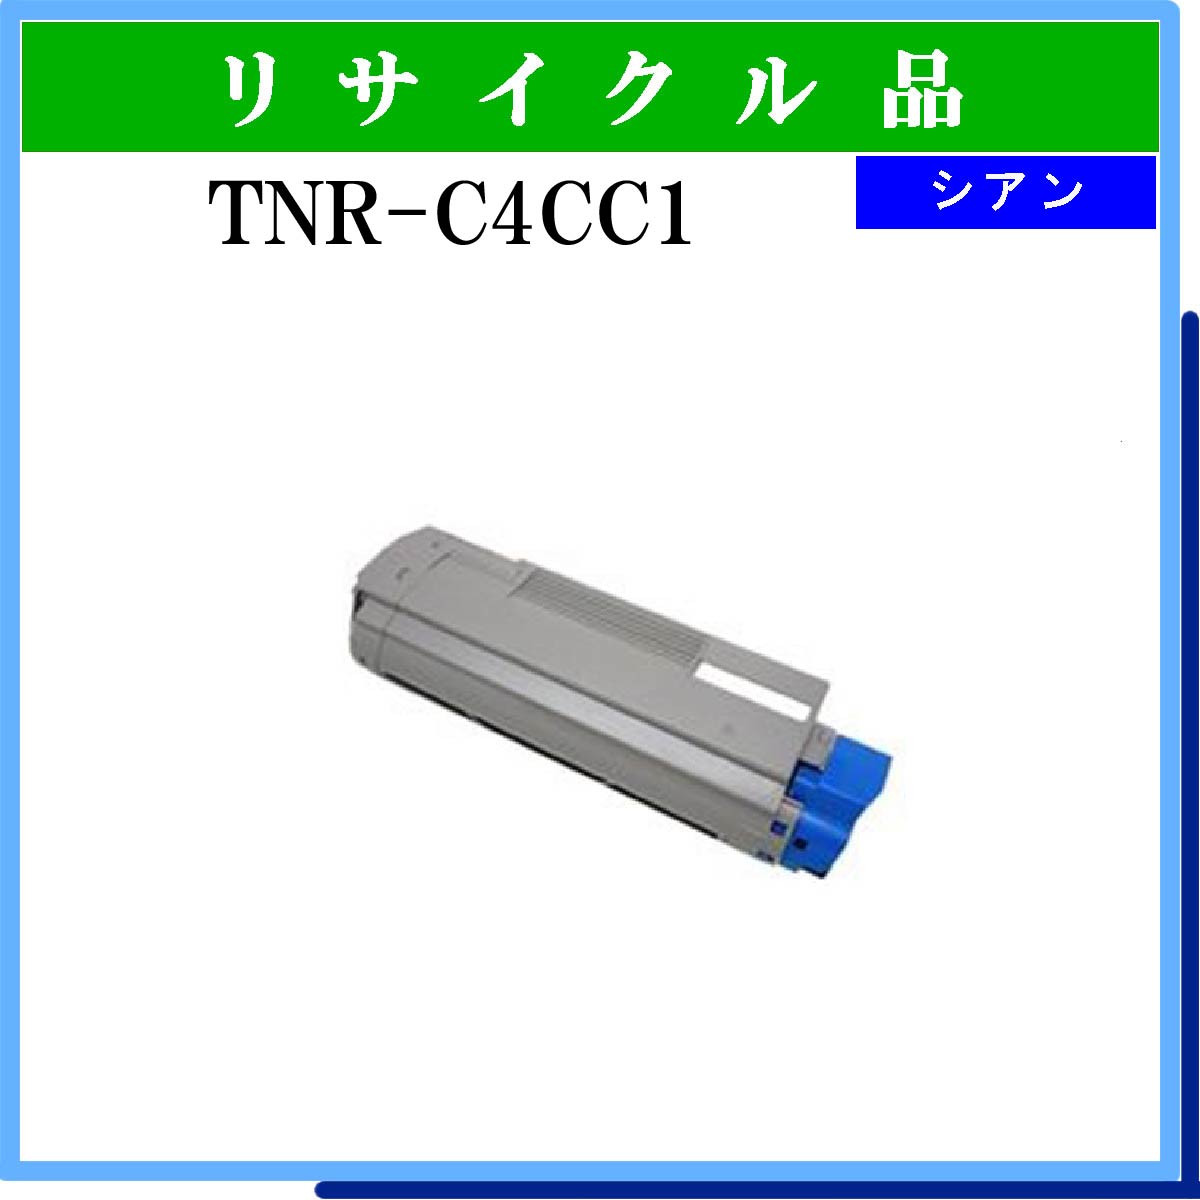 TNR-C4CC1 - ウインドウを閉じる